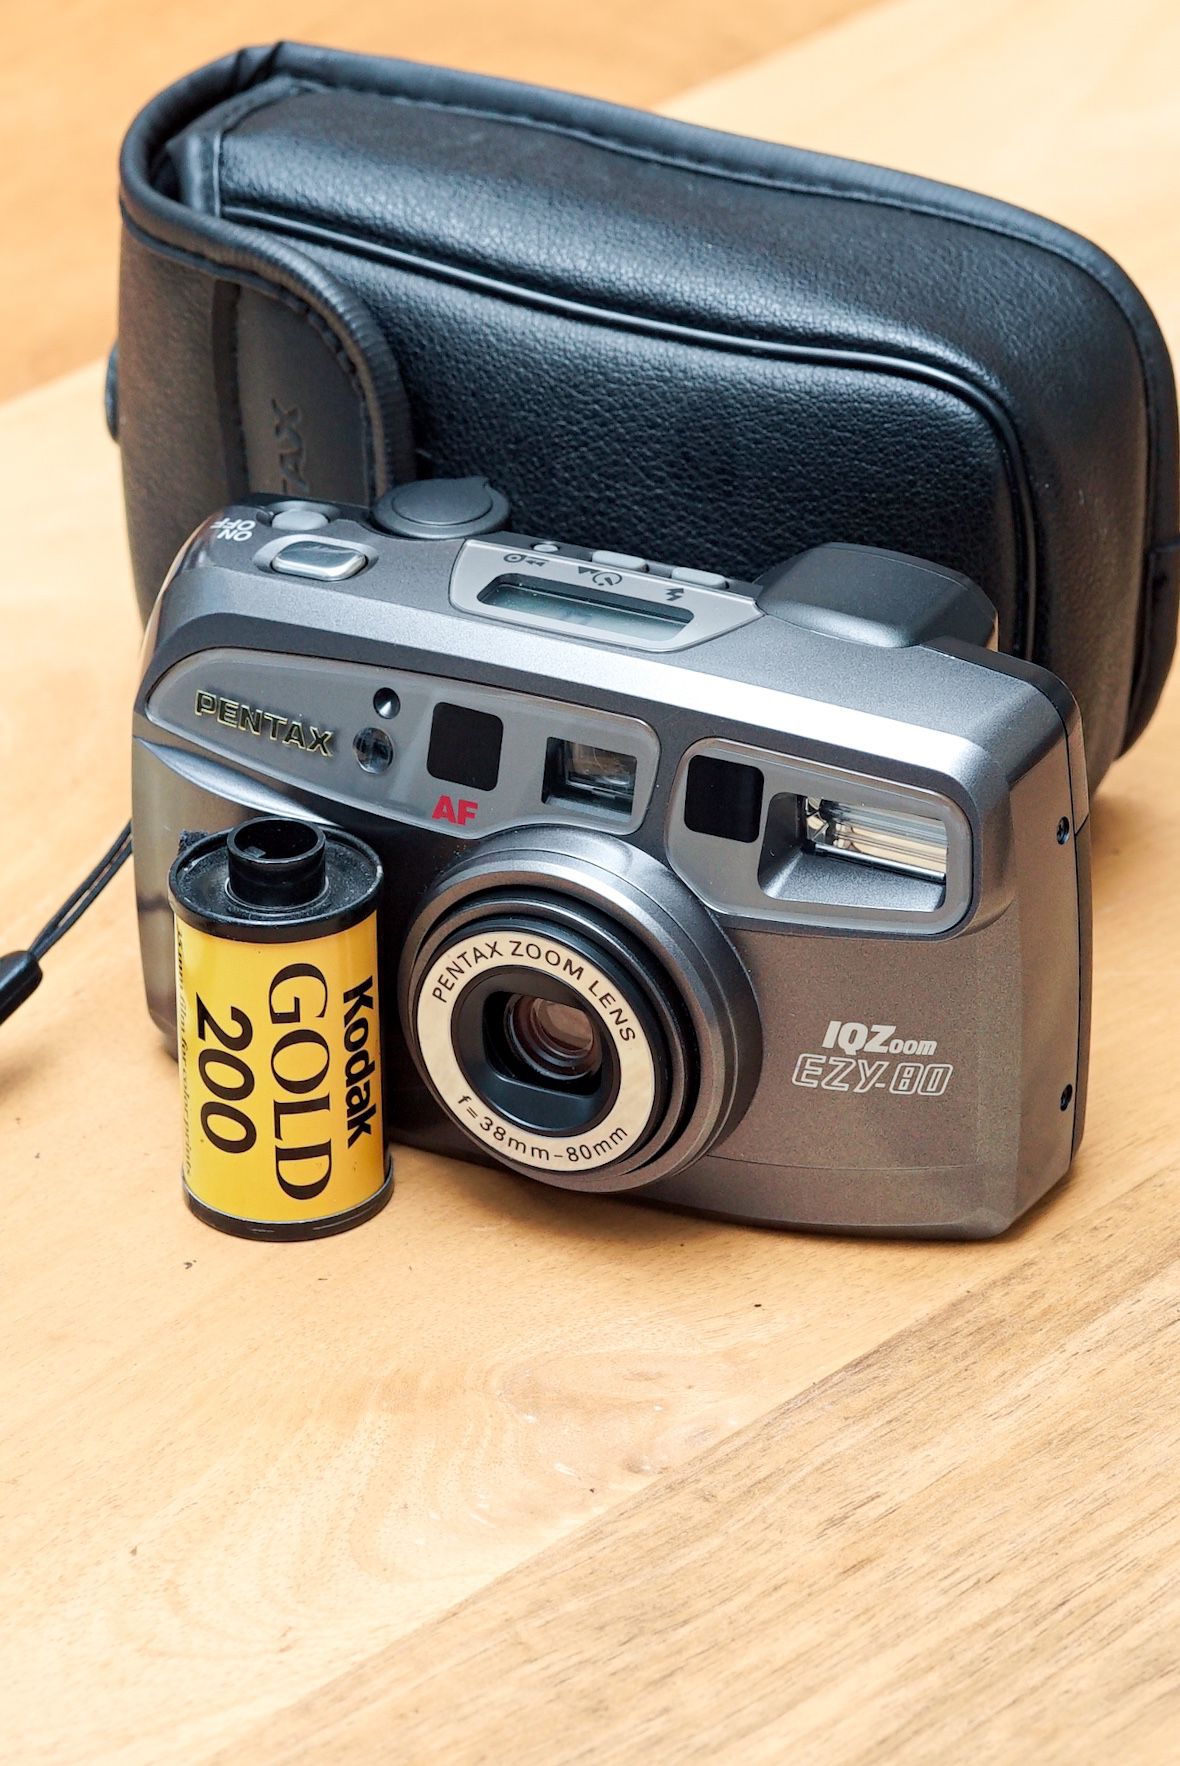 Pentax Film Camera